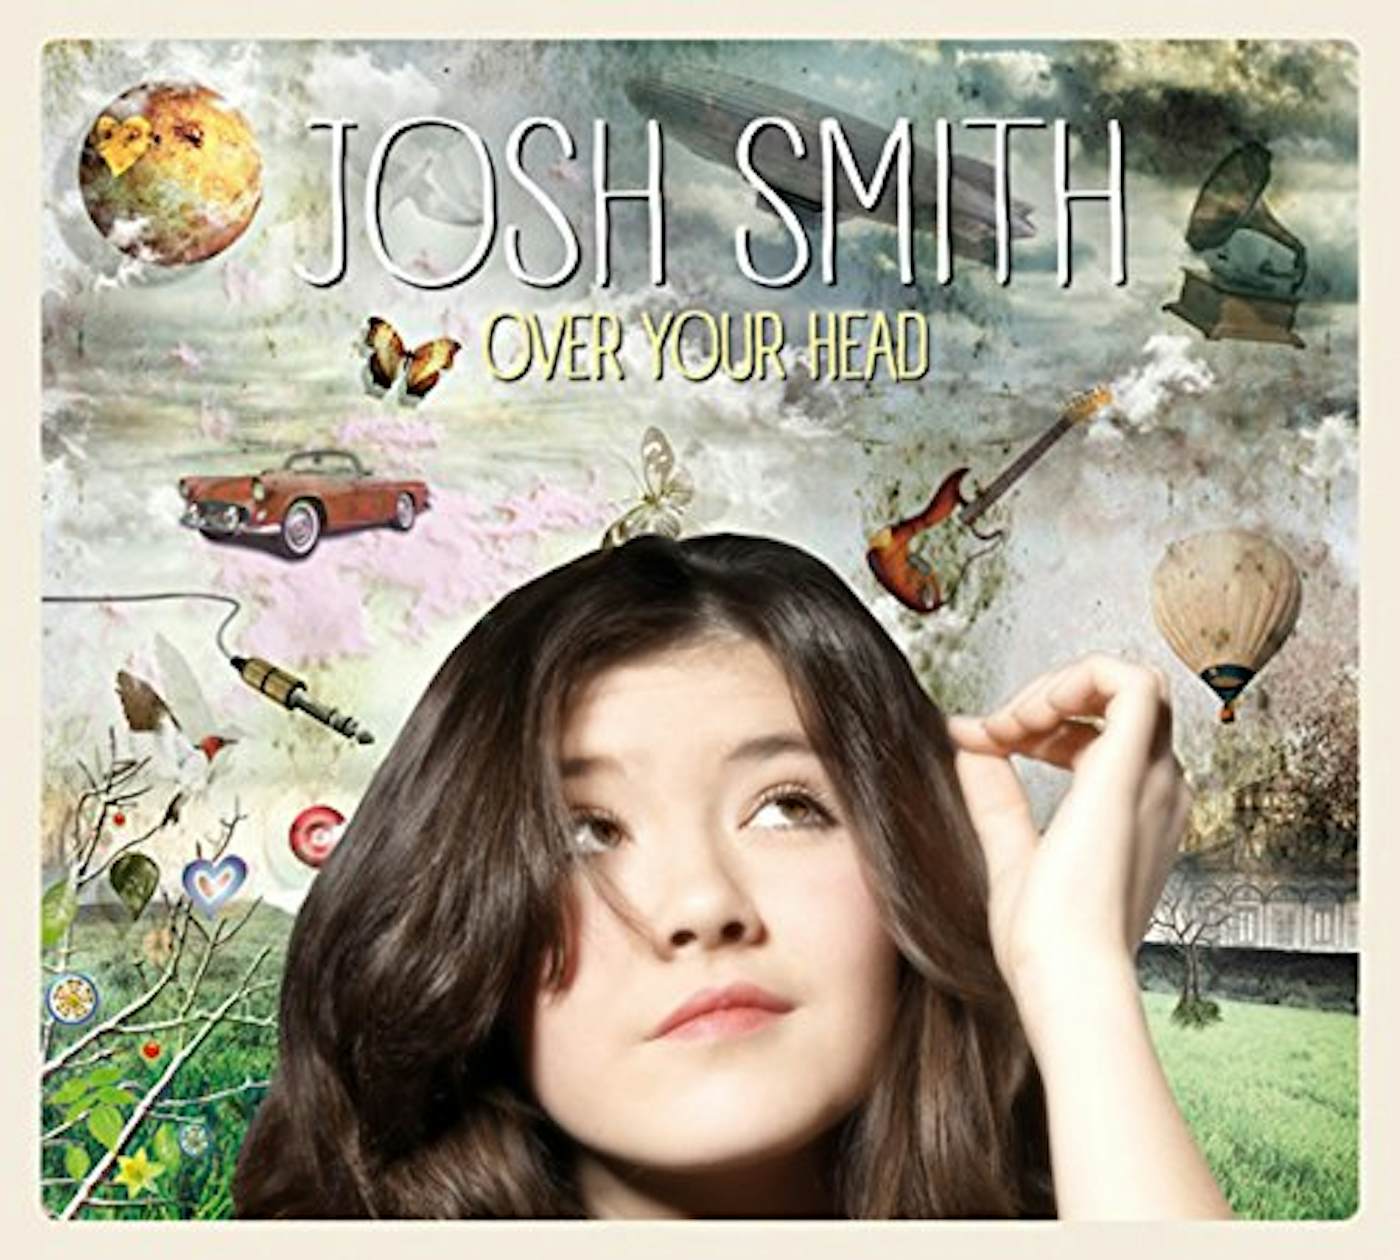 Josh Smith - II for Sale